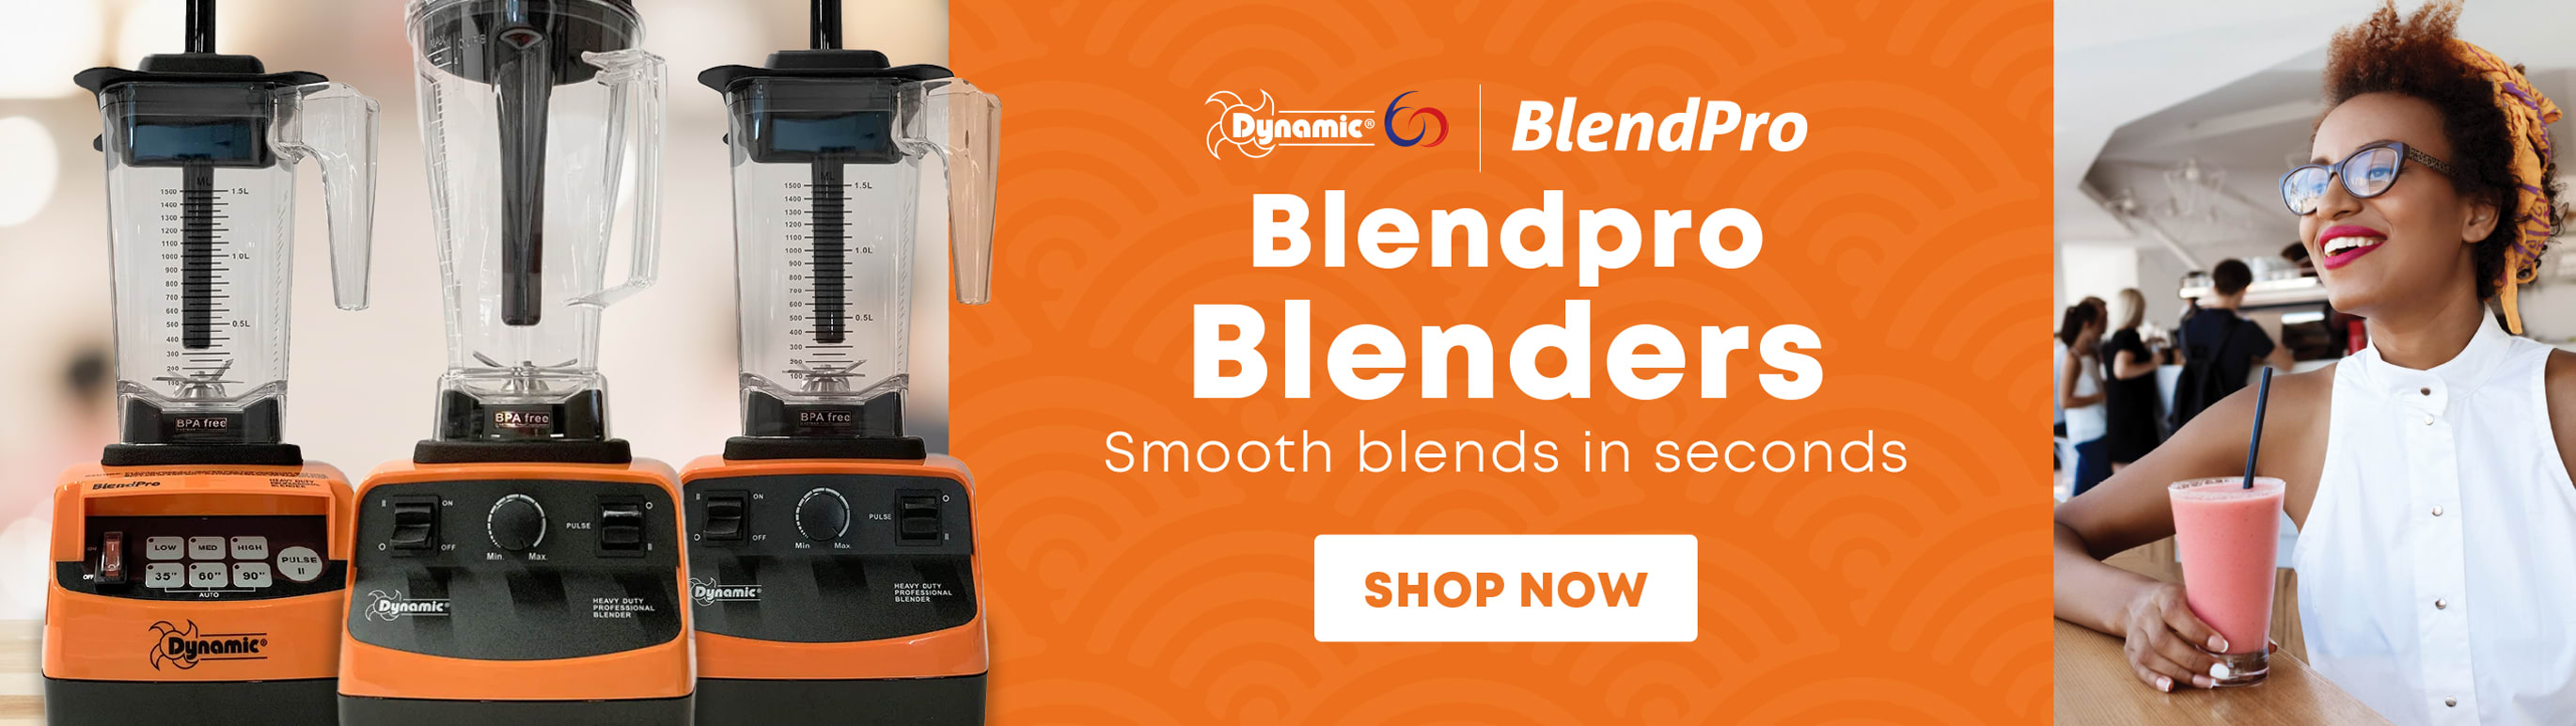 Dynamic BlendPro Blenders